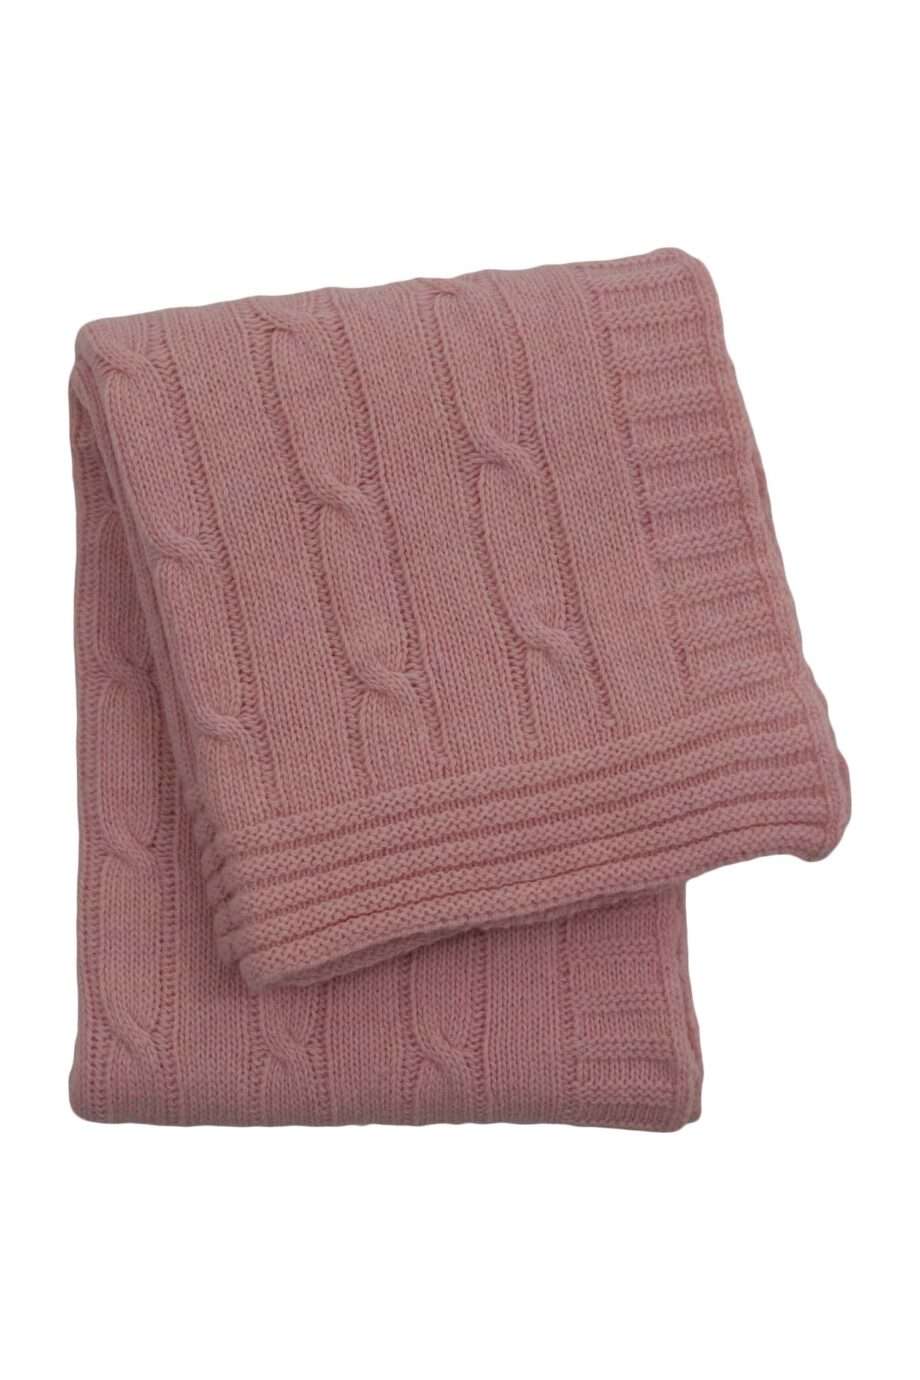 twist baby pink knitted woolen little blanket small